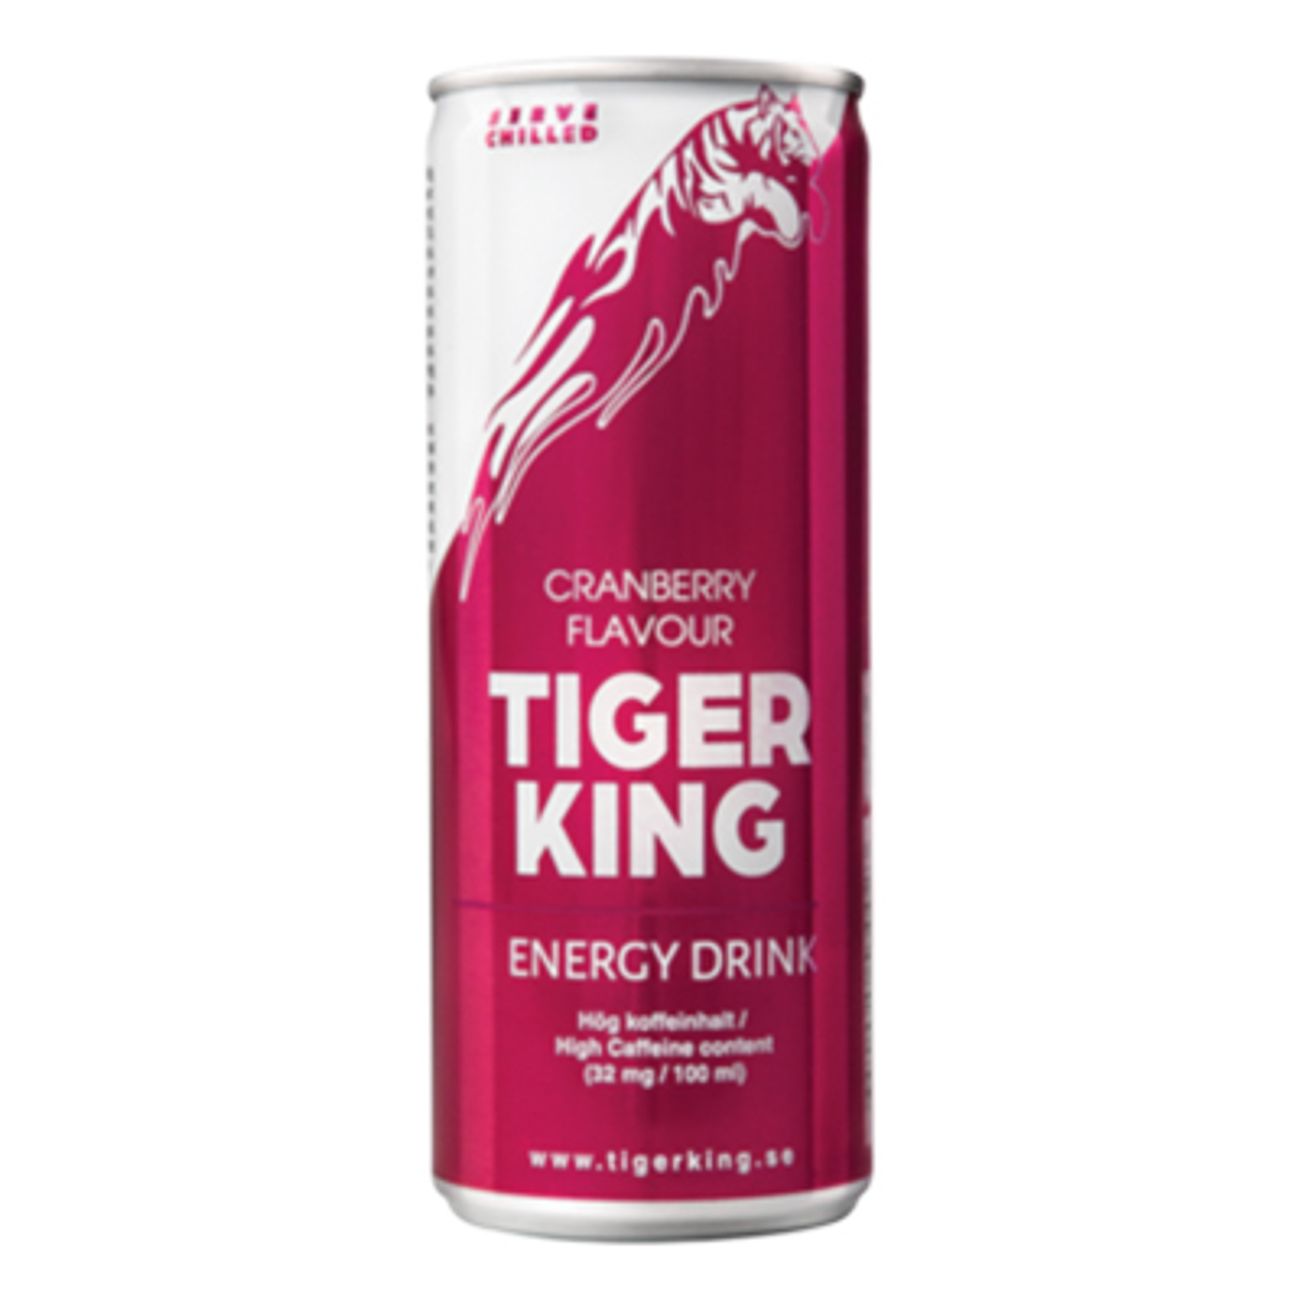 tiger-king-tranbar-1